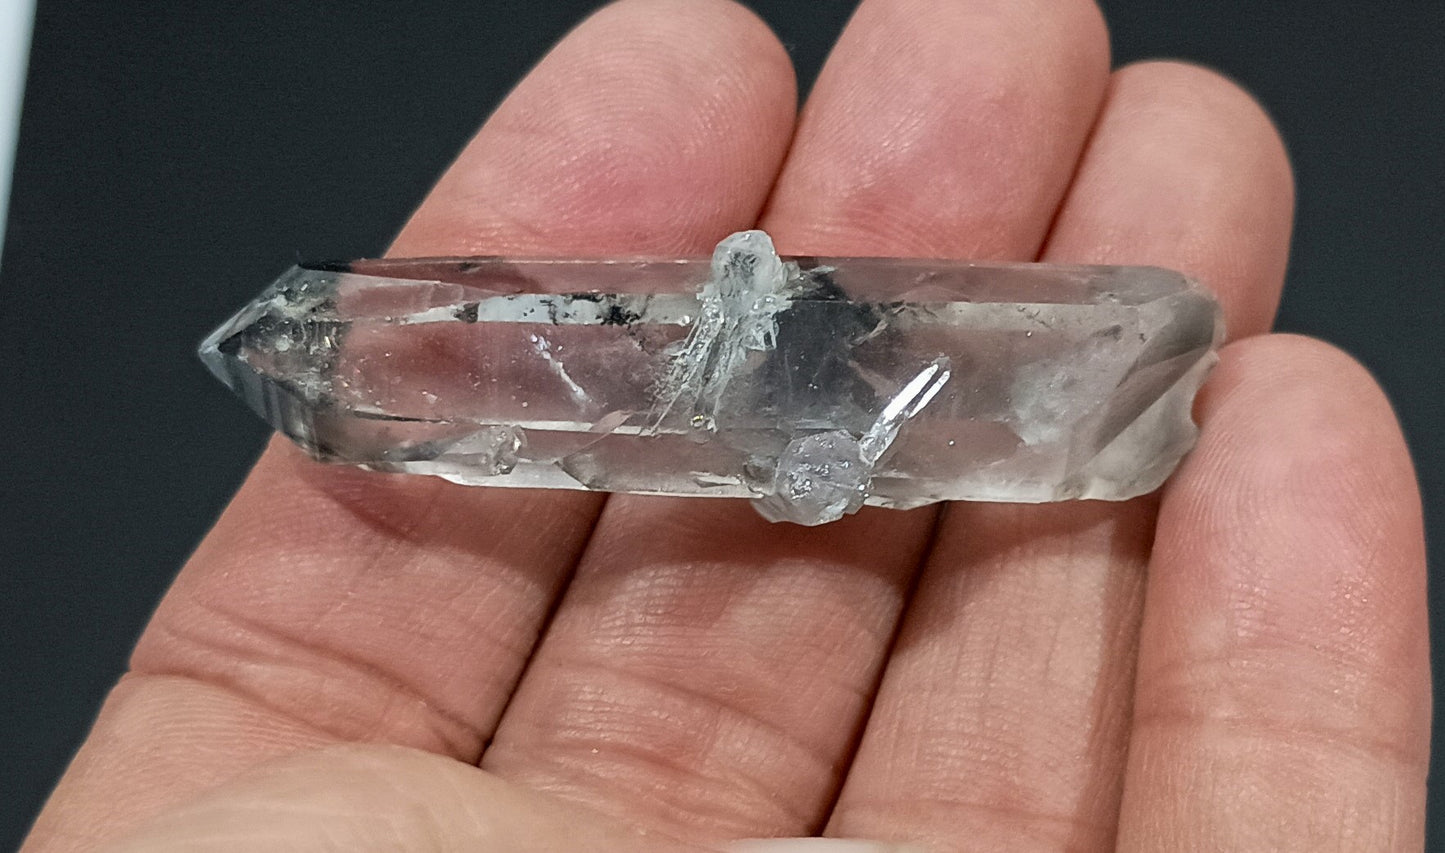 Double Terminated Tibetan Quartz Crystal